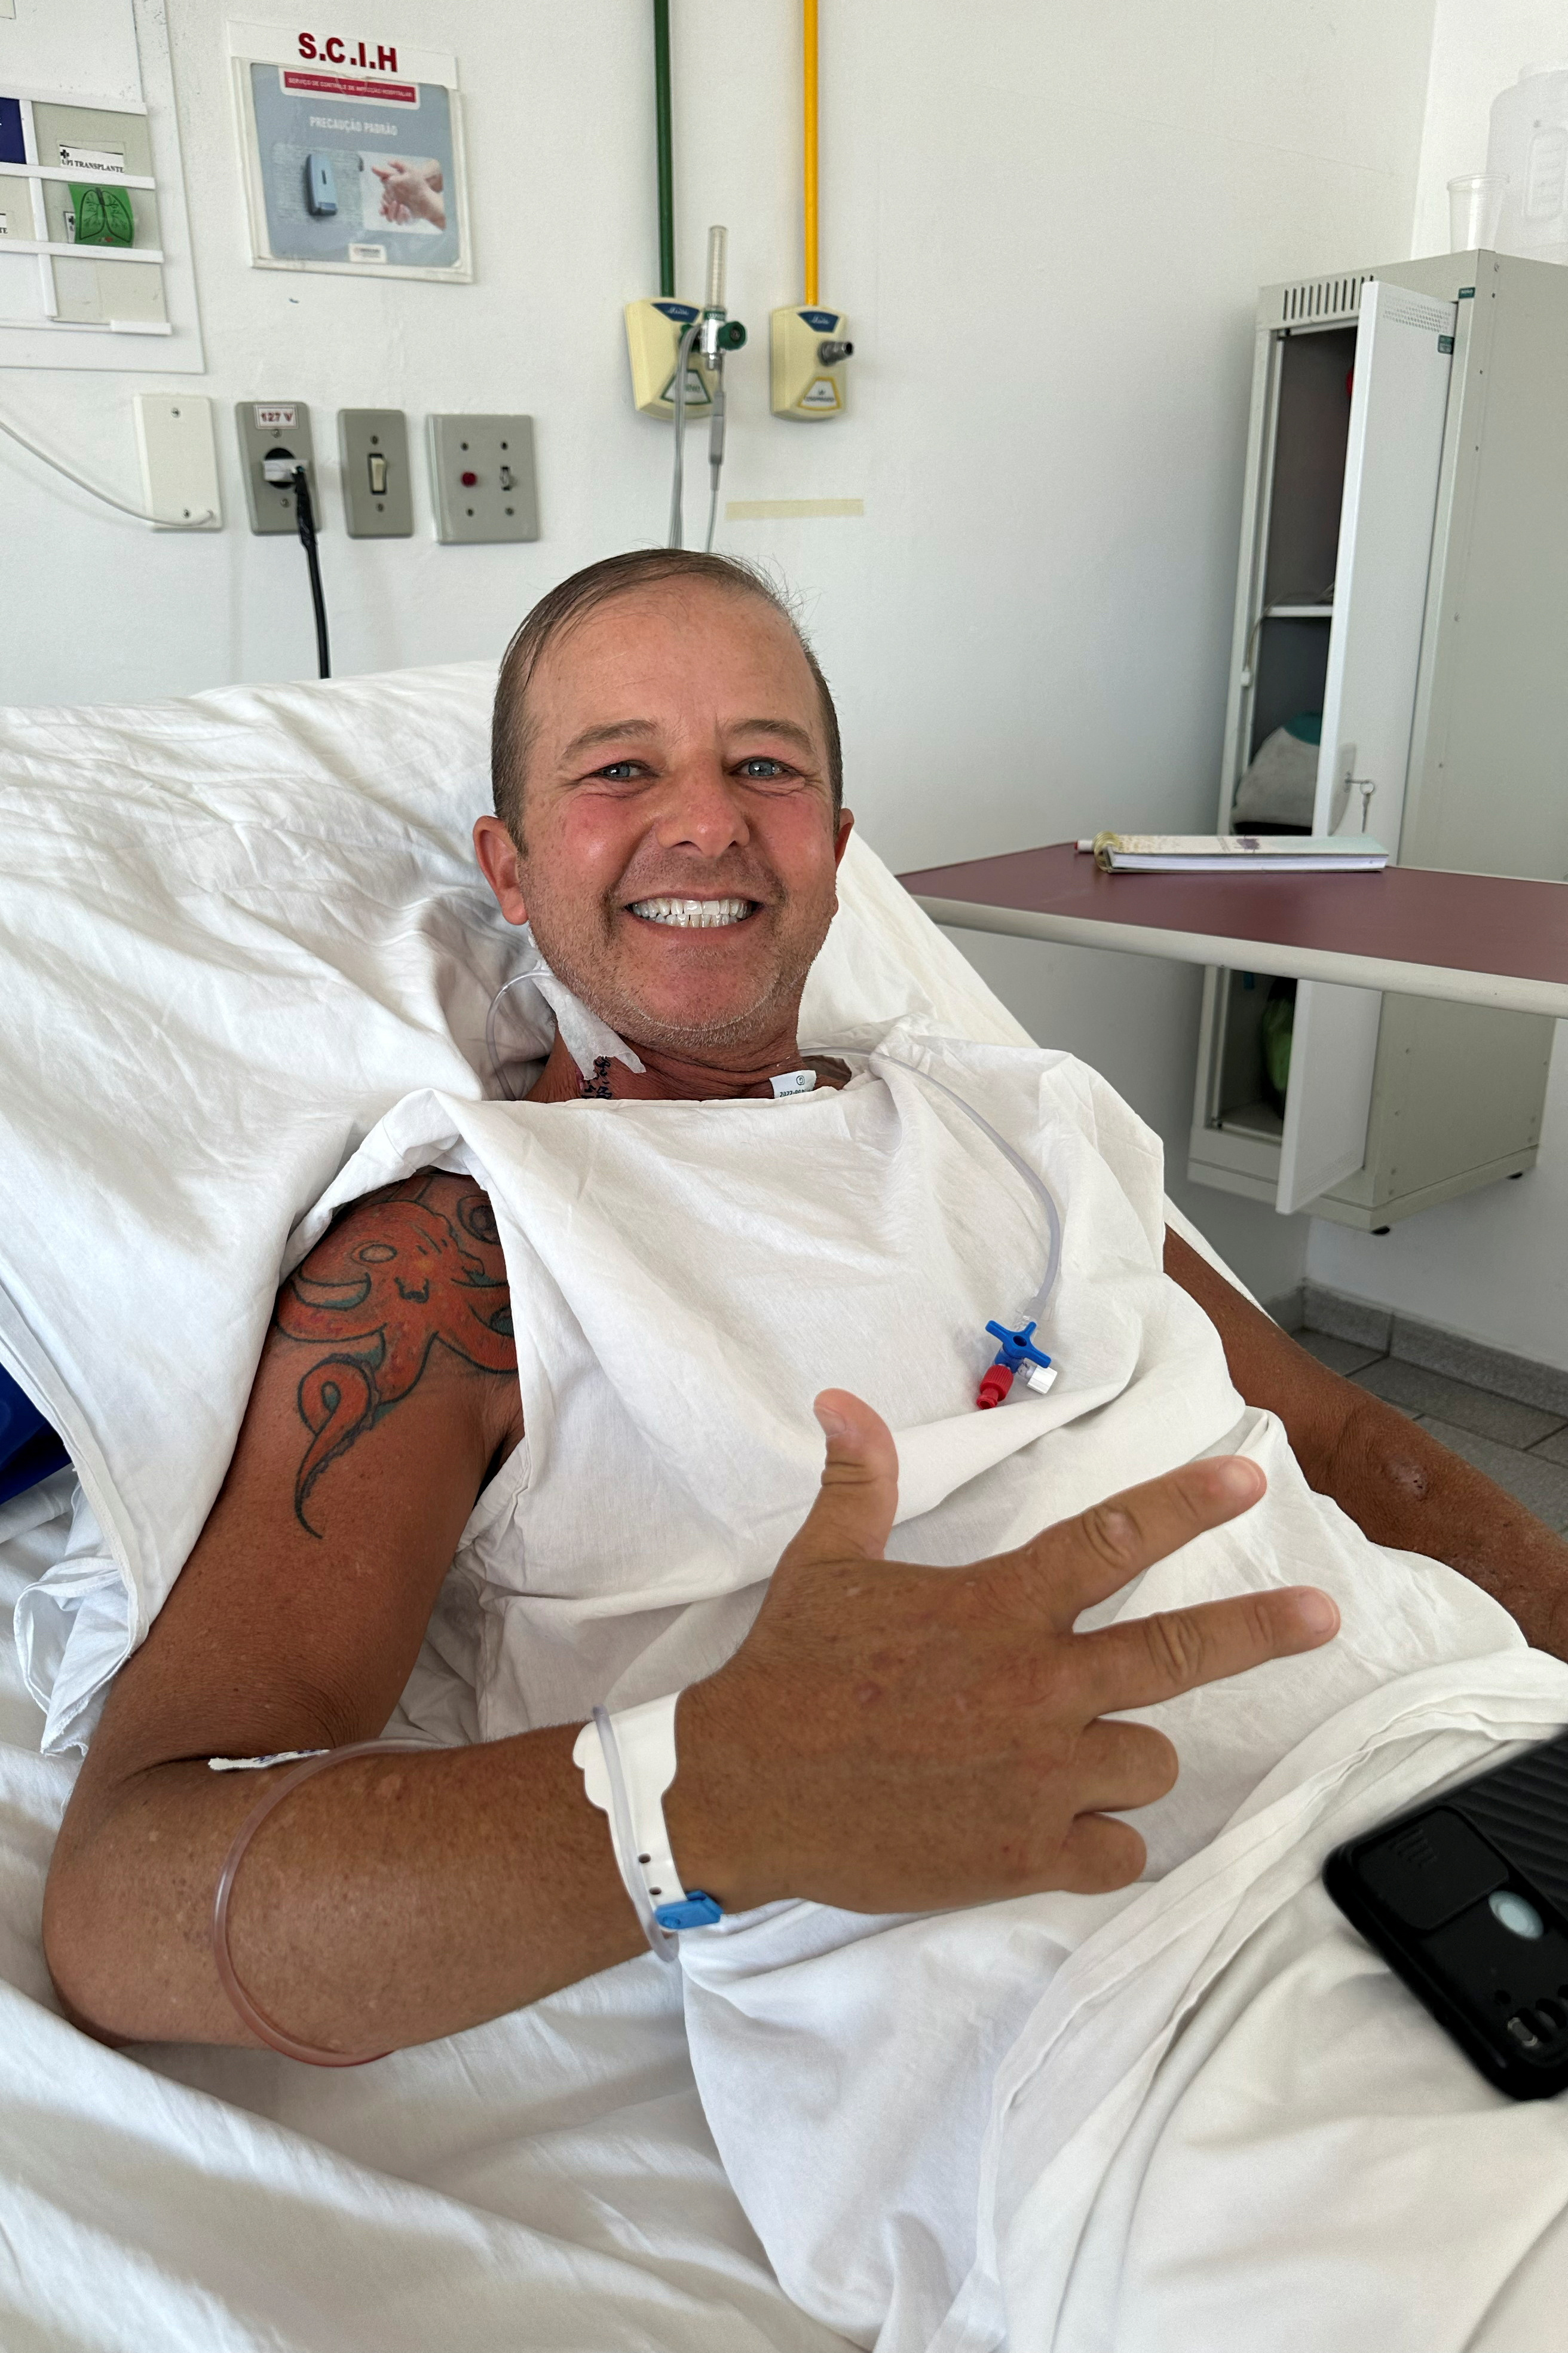 Patient Ricardo Medeiros de Oliveira reacts after a kidney transplant at the hospital Santa Casa de Juiz de Fora